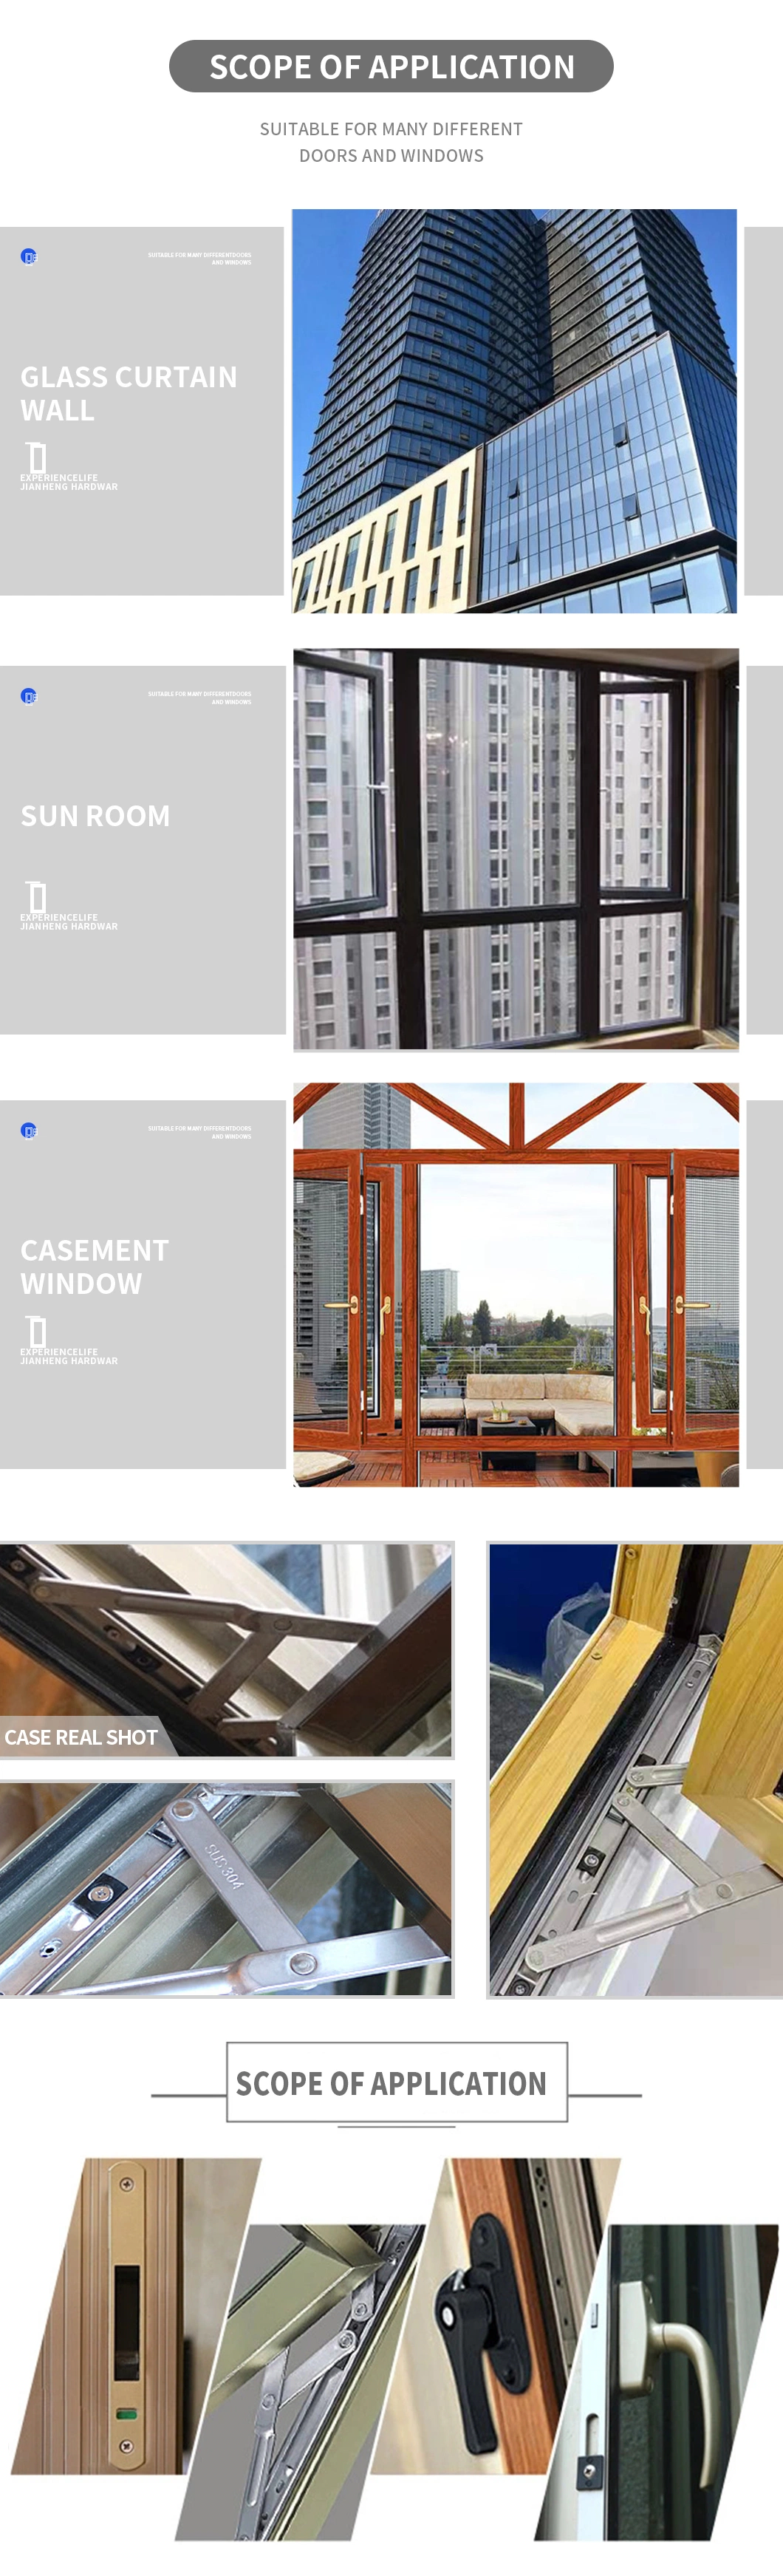 OEM Customized Balcony Door and Window Hardware Accessories Lever Handle